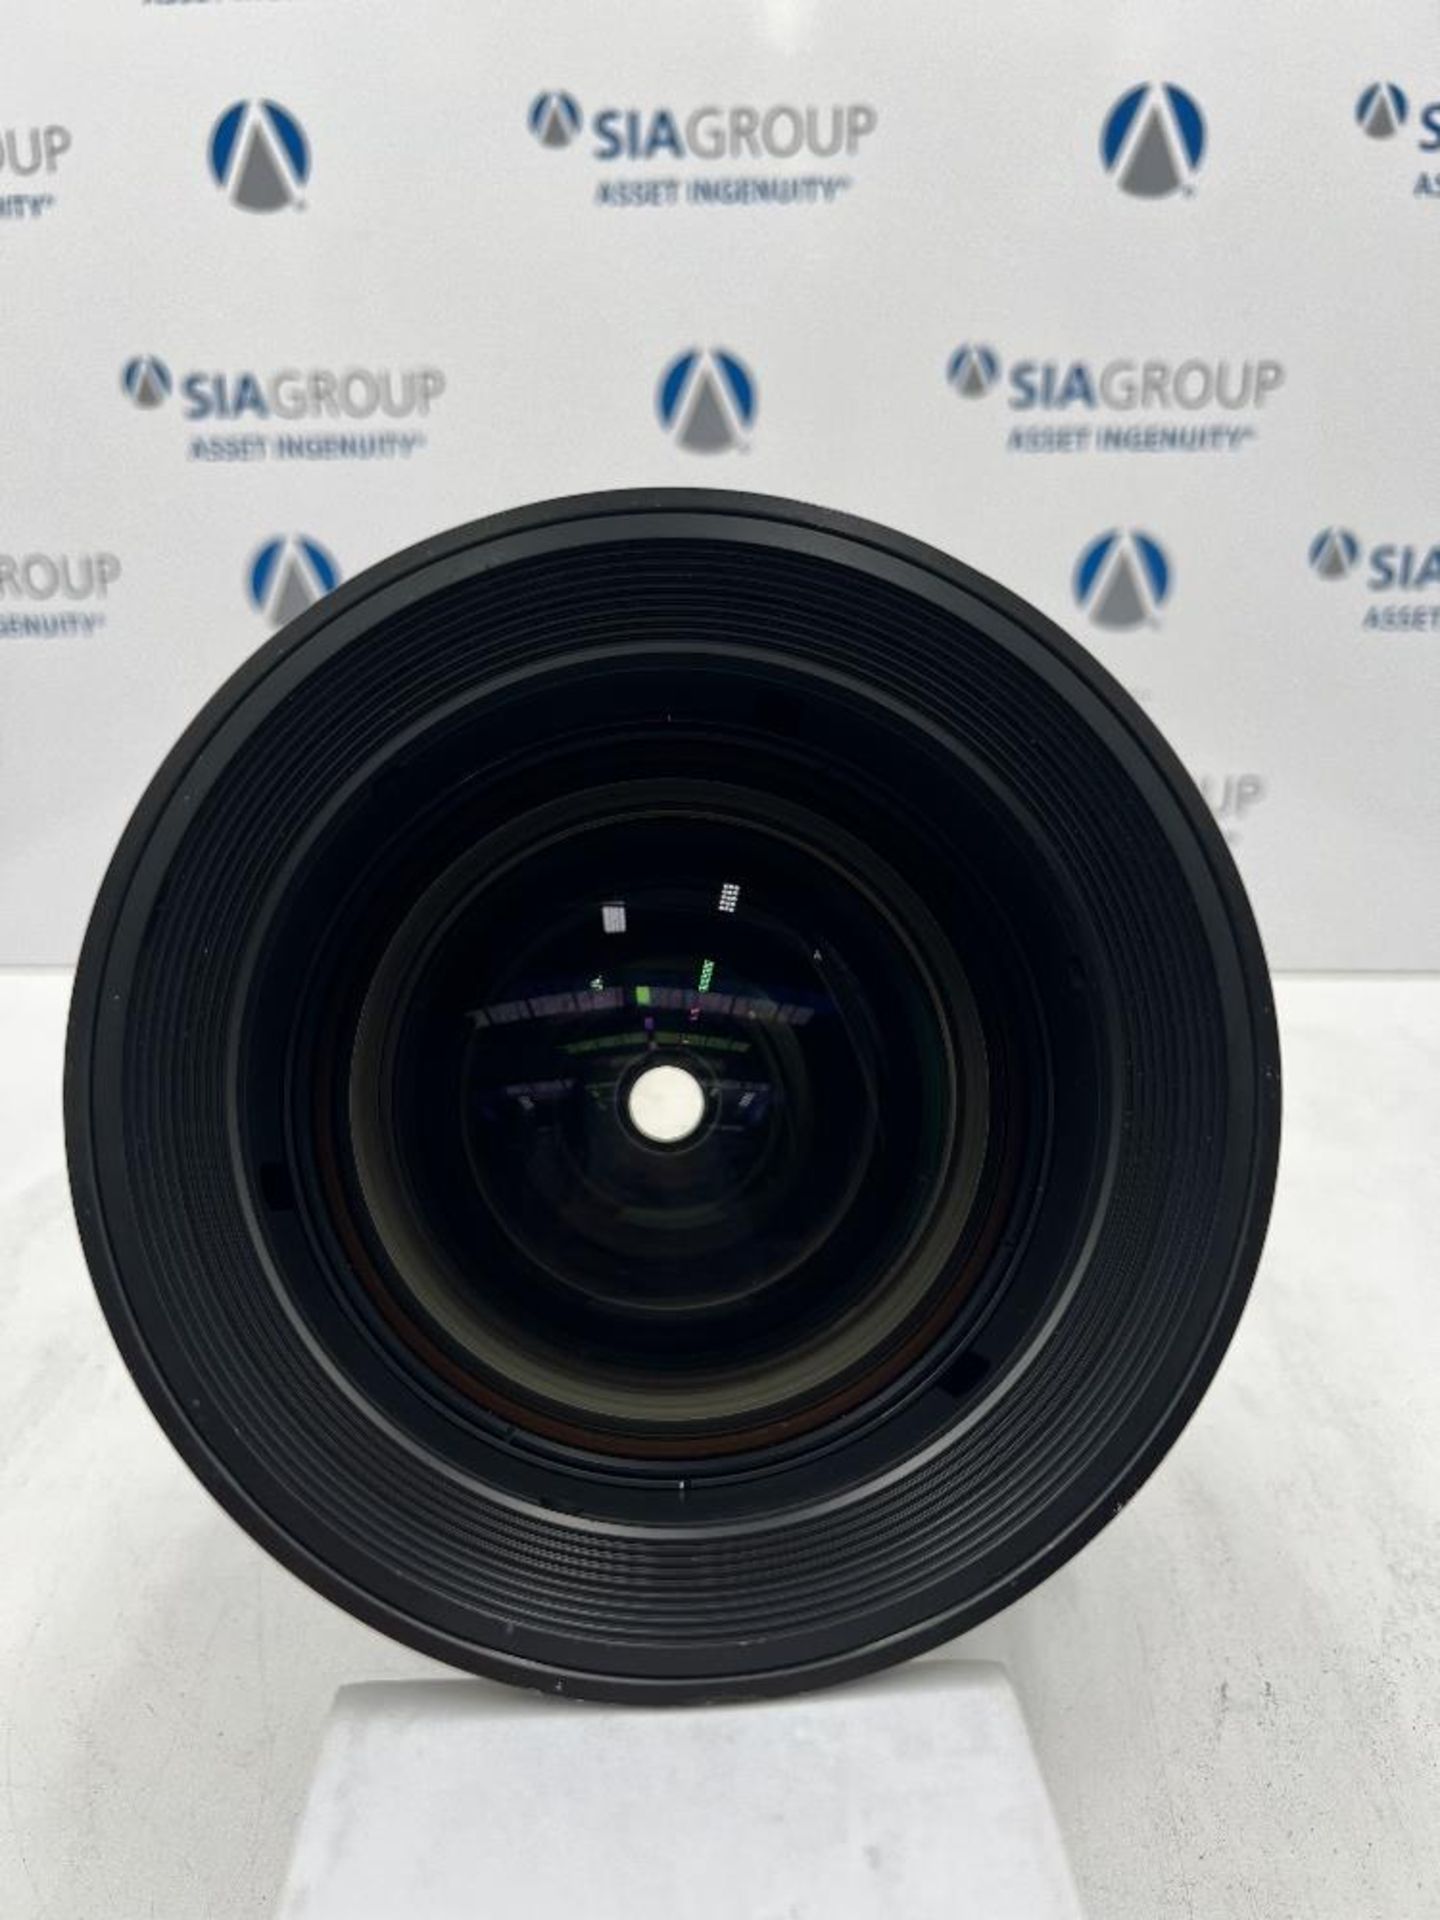 Panasonic ET-D75LE10 1.3-1.7 Zoom Lens With Carrier Case - Image 6 of 10